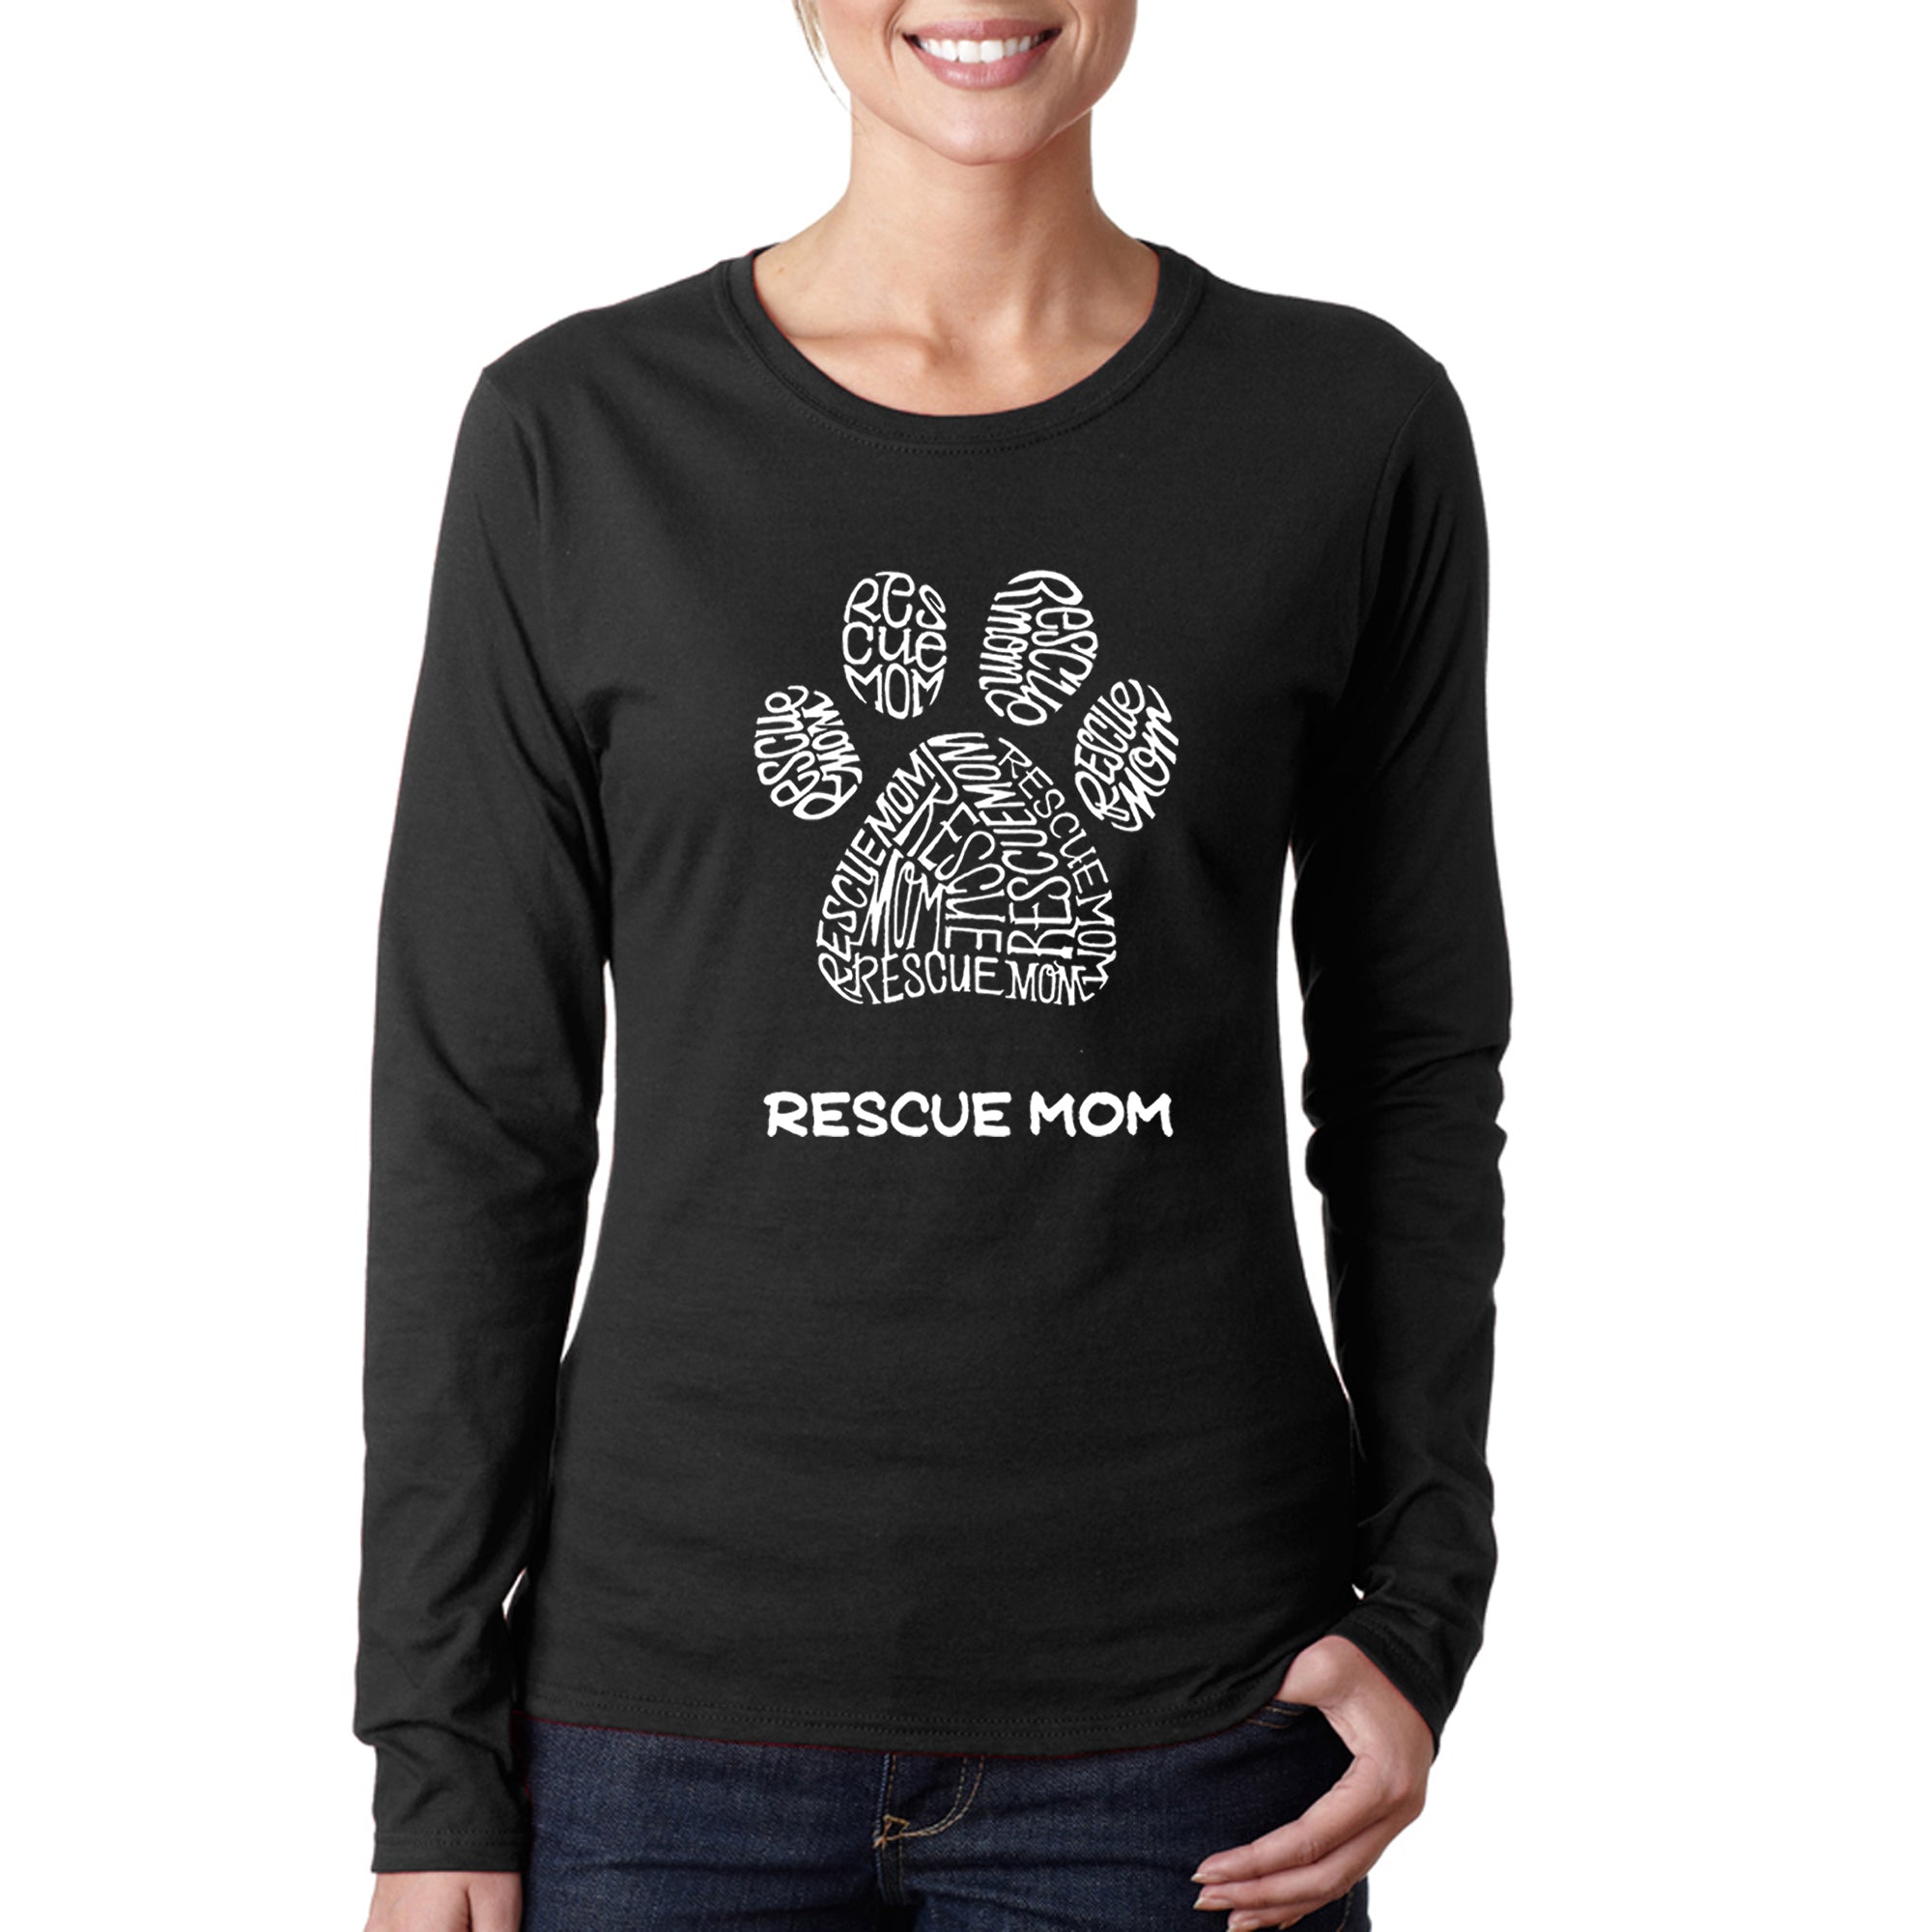 Rescue Mom - Women's Word Art Long Sleeve T-Shirt - Black - Small